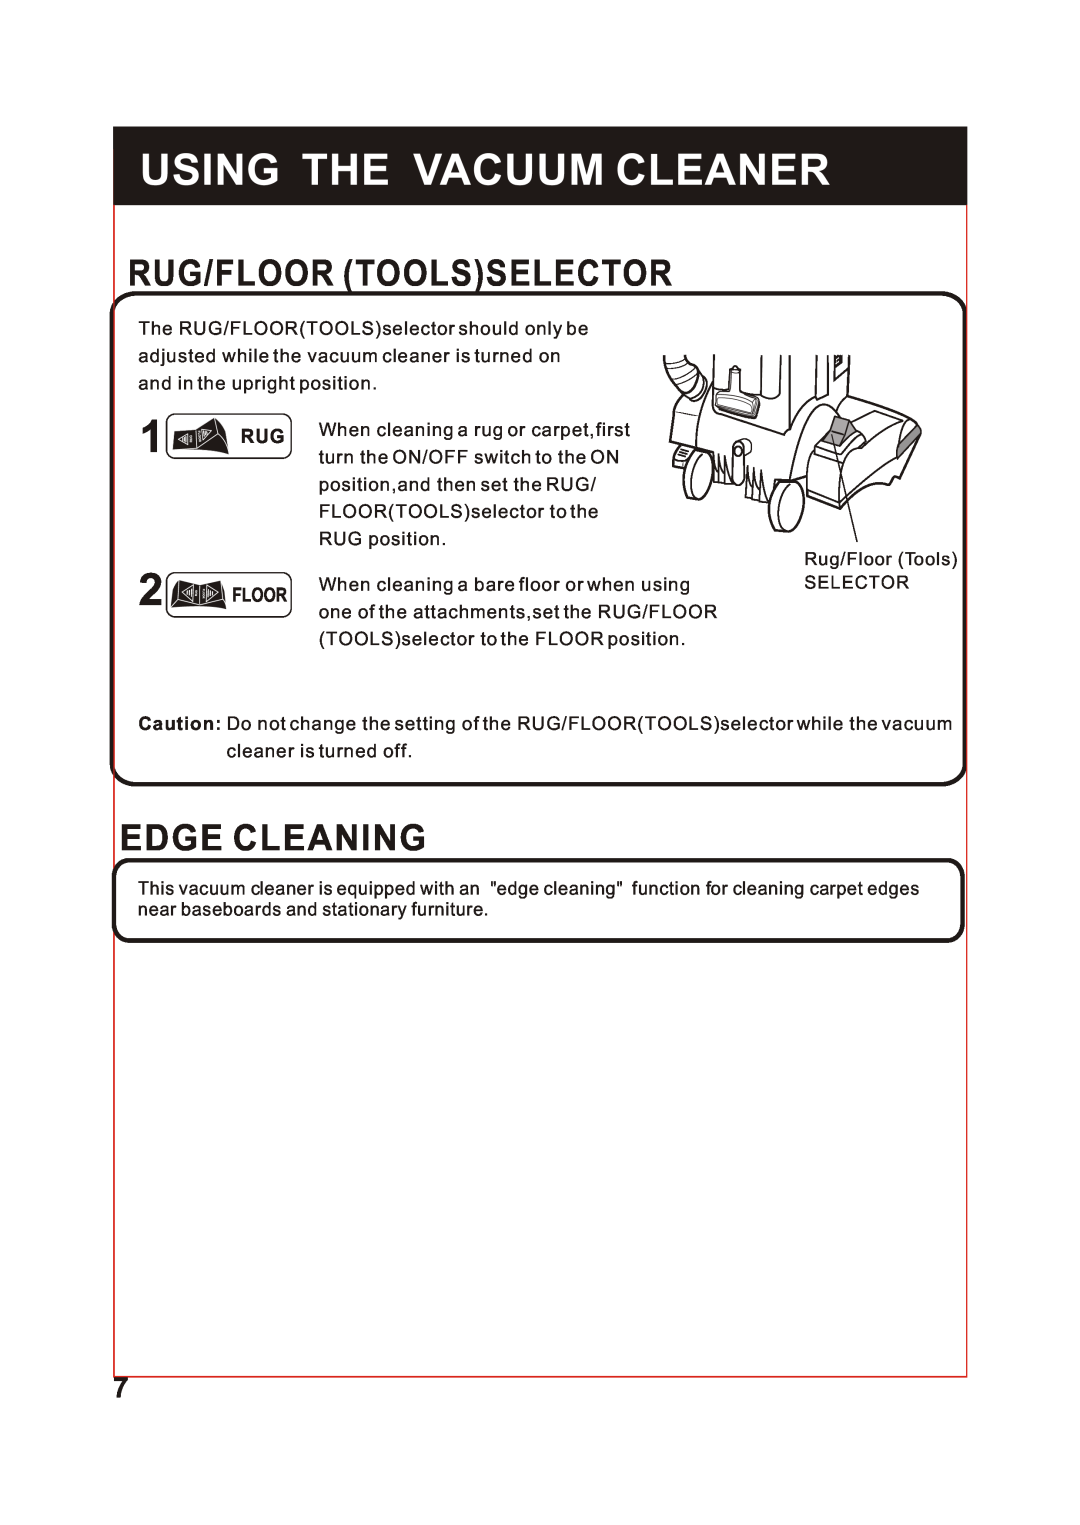 Fantom Vacuum FM741 instruction manual Rug/Floor Toolsselector, Edge Cleaning, Using The Vacuum Cleaner 